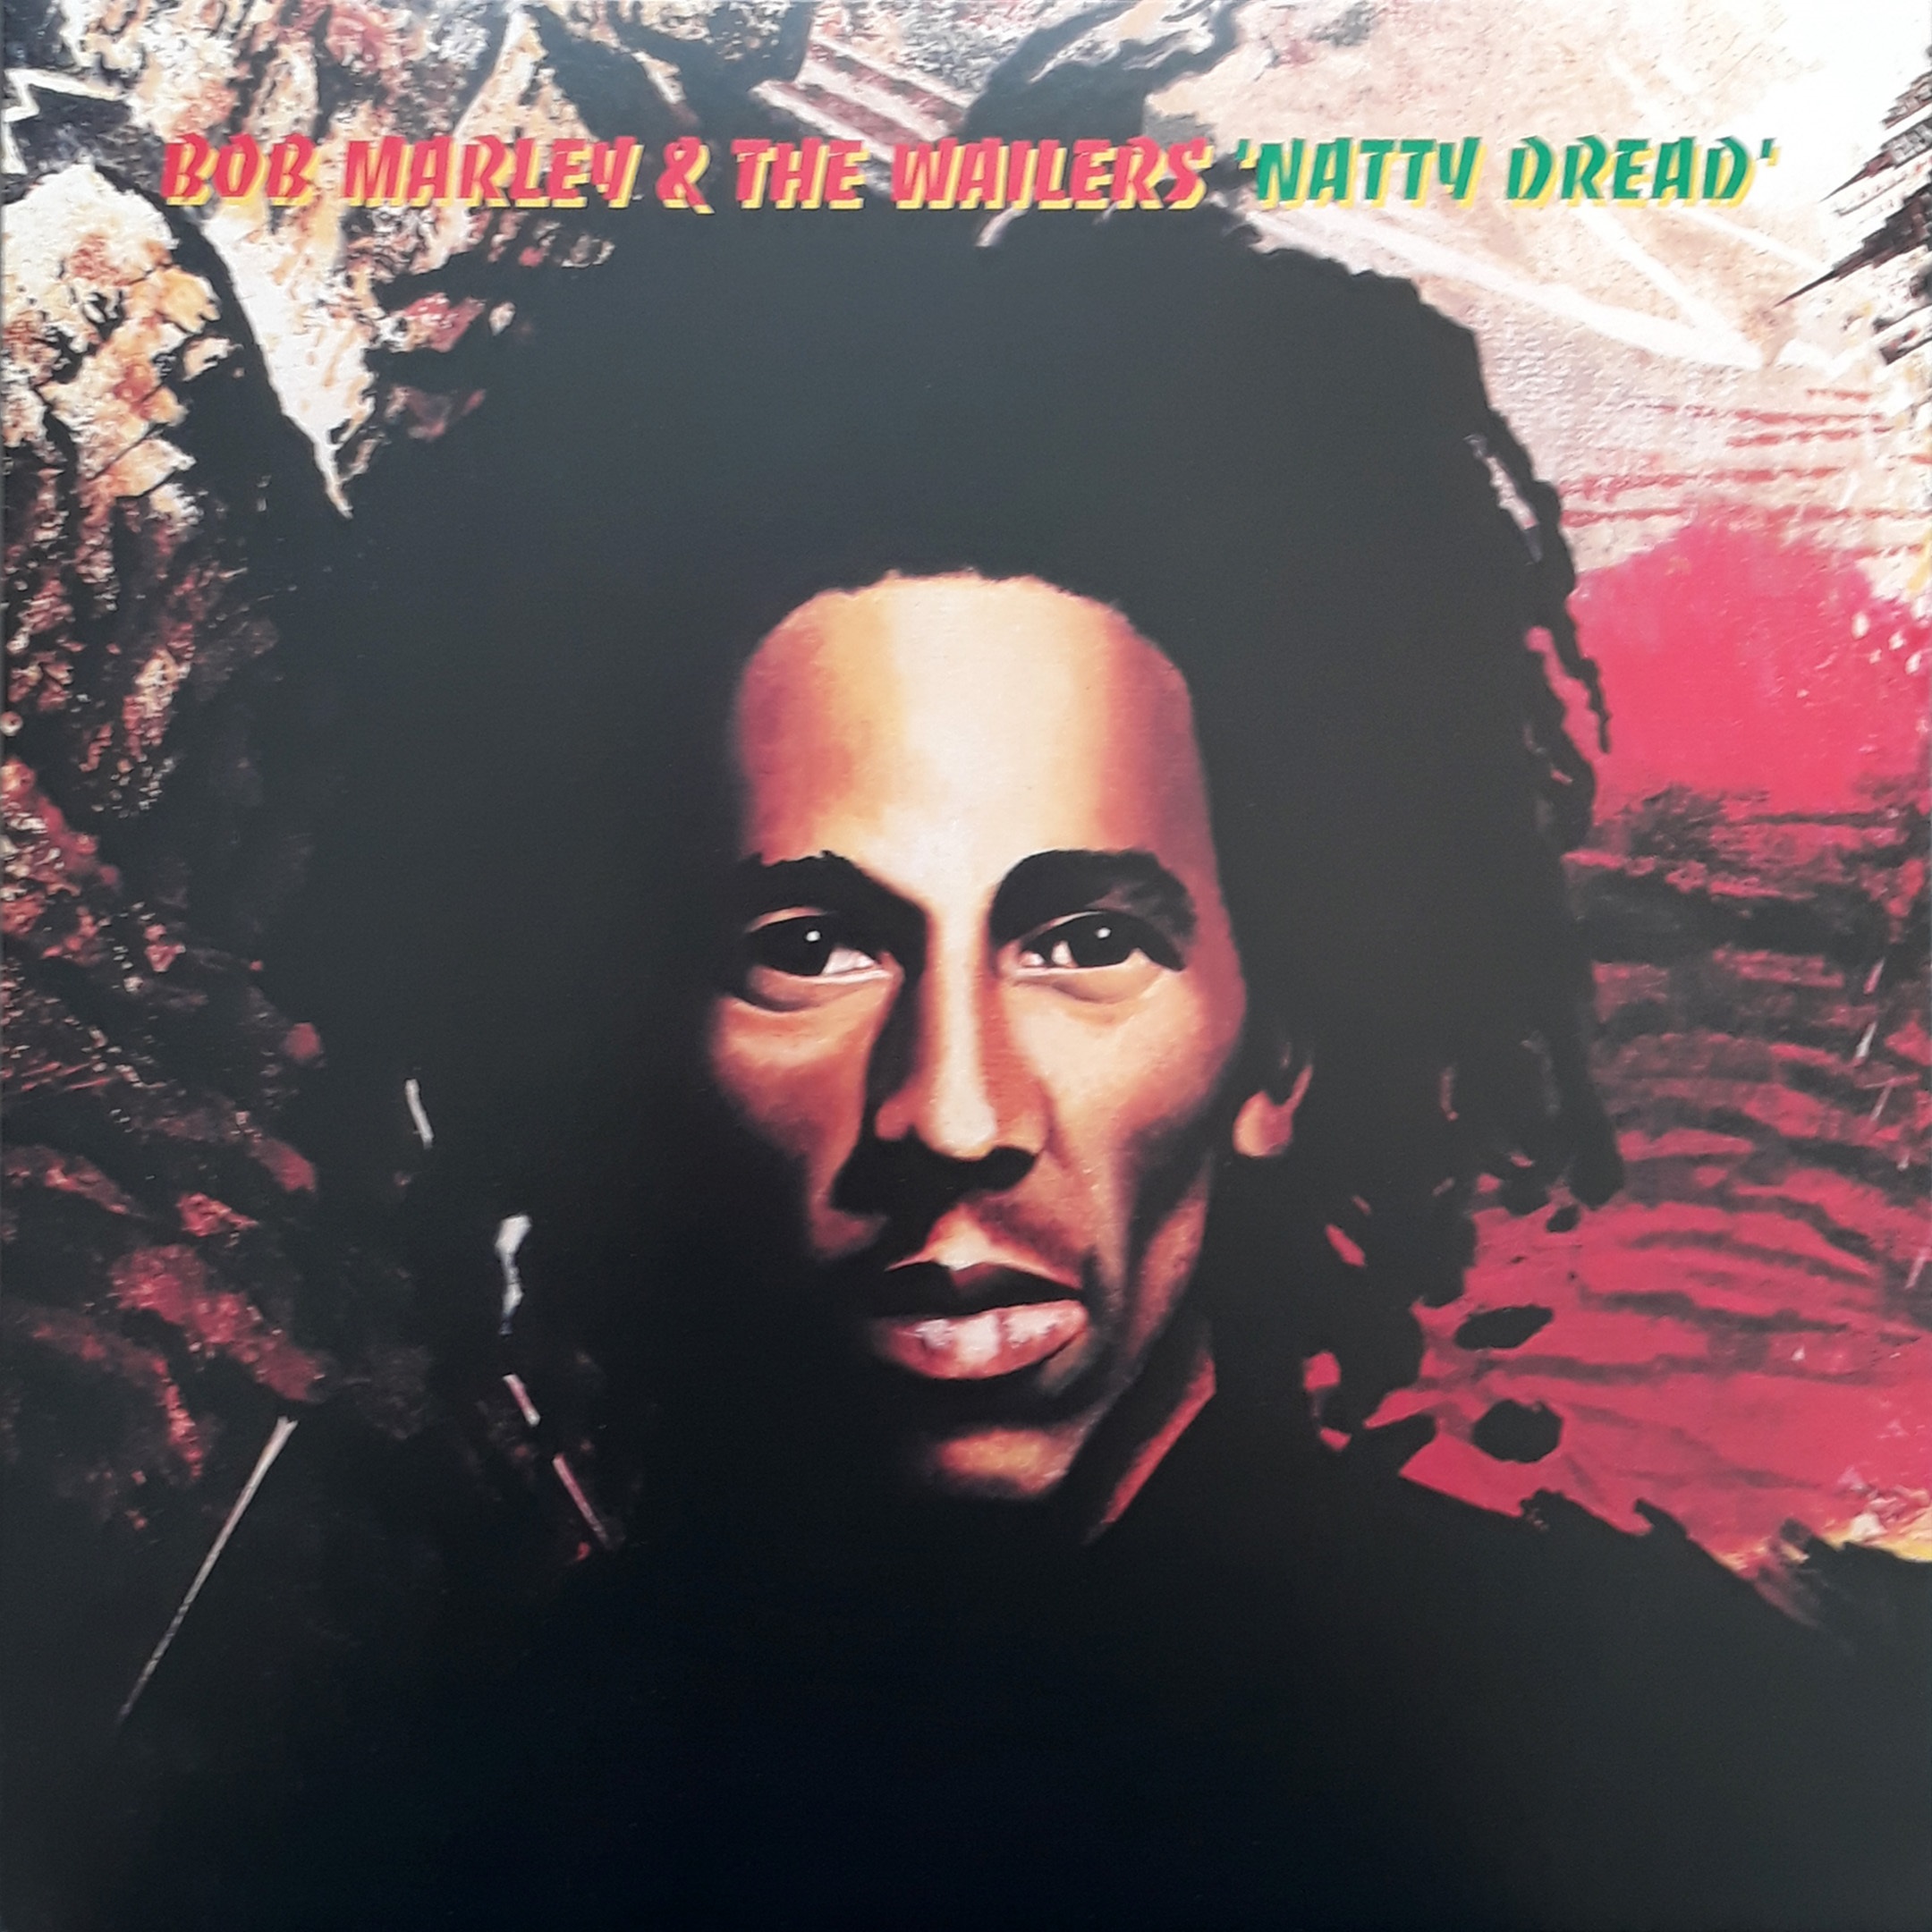 Bob Marley & The Wailers – Natty Dread (Limited Edition Half-Speed Master) (1974/2020) [FLAC 24bit/96kHz]